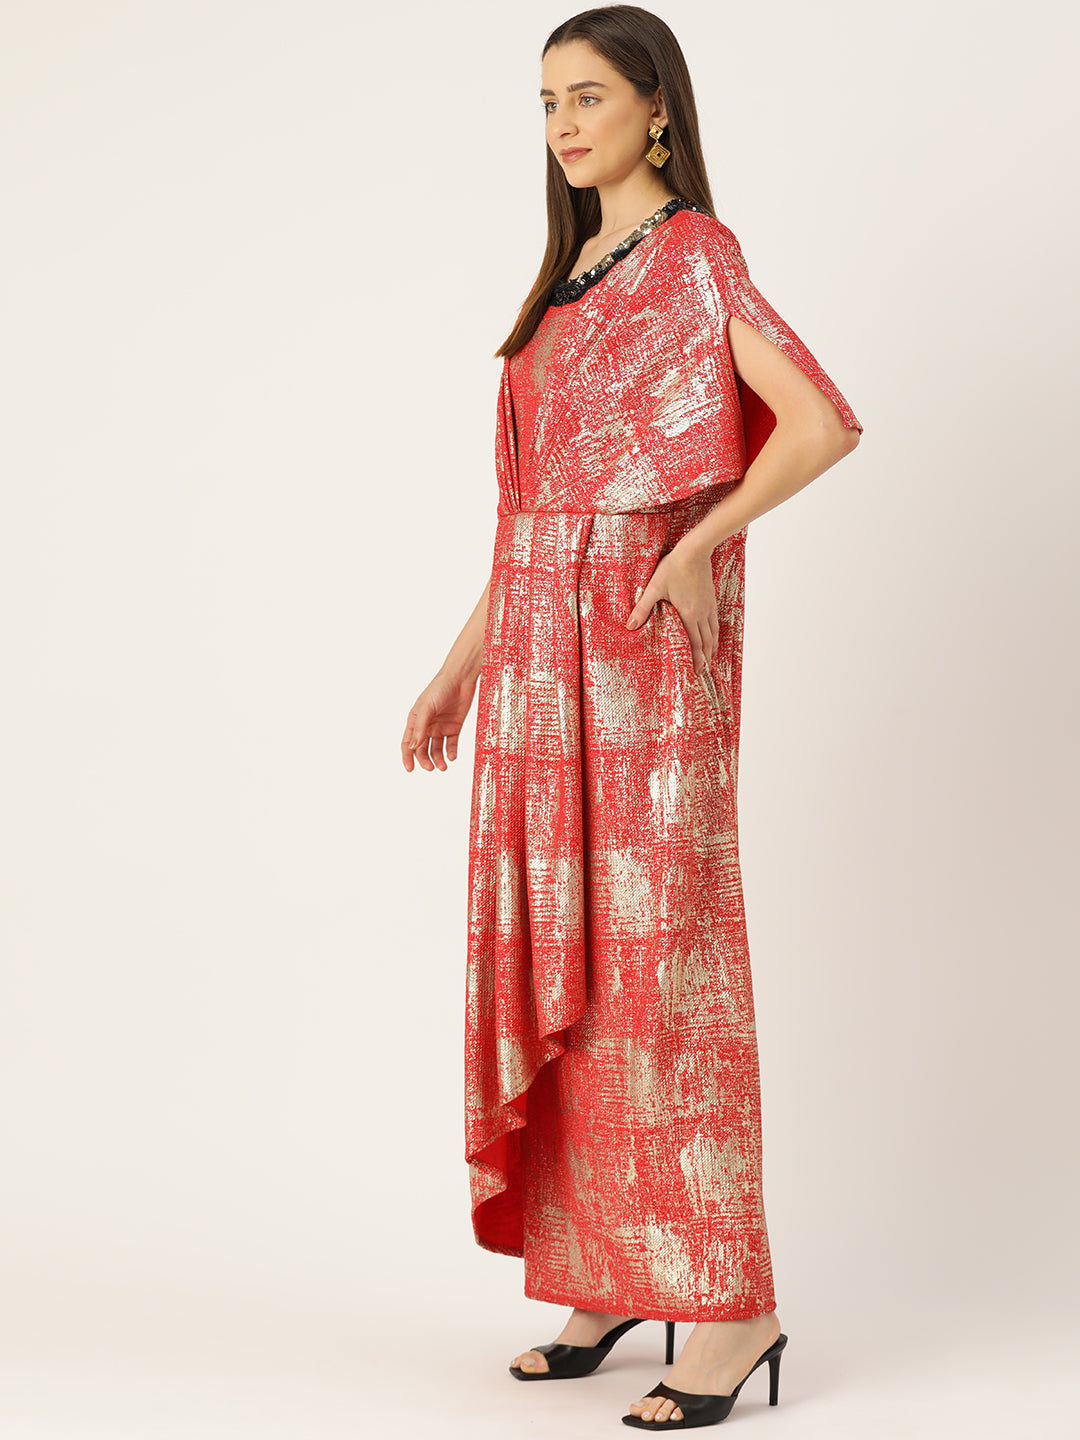 Designer Red Polyester Dress